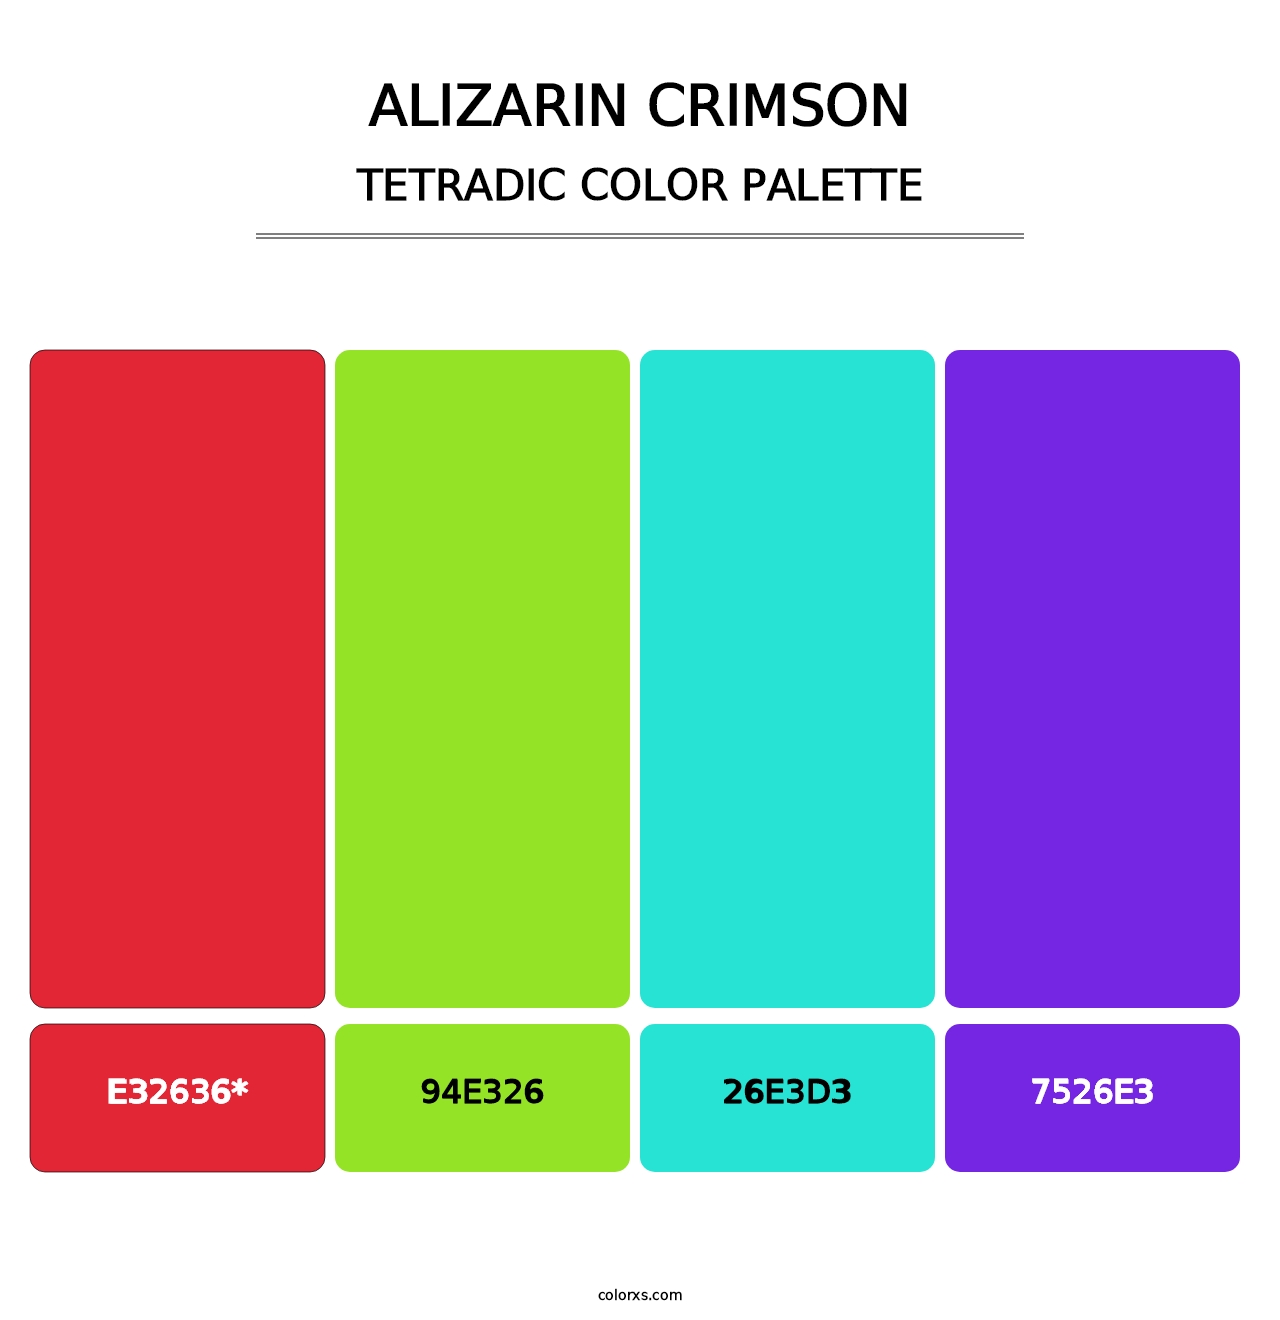 Alizarin Crimson - Tetradic Color Palette